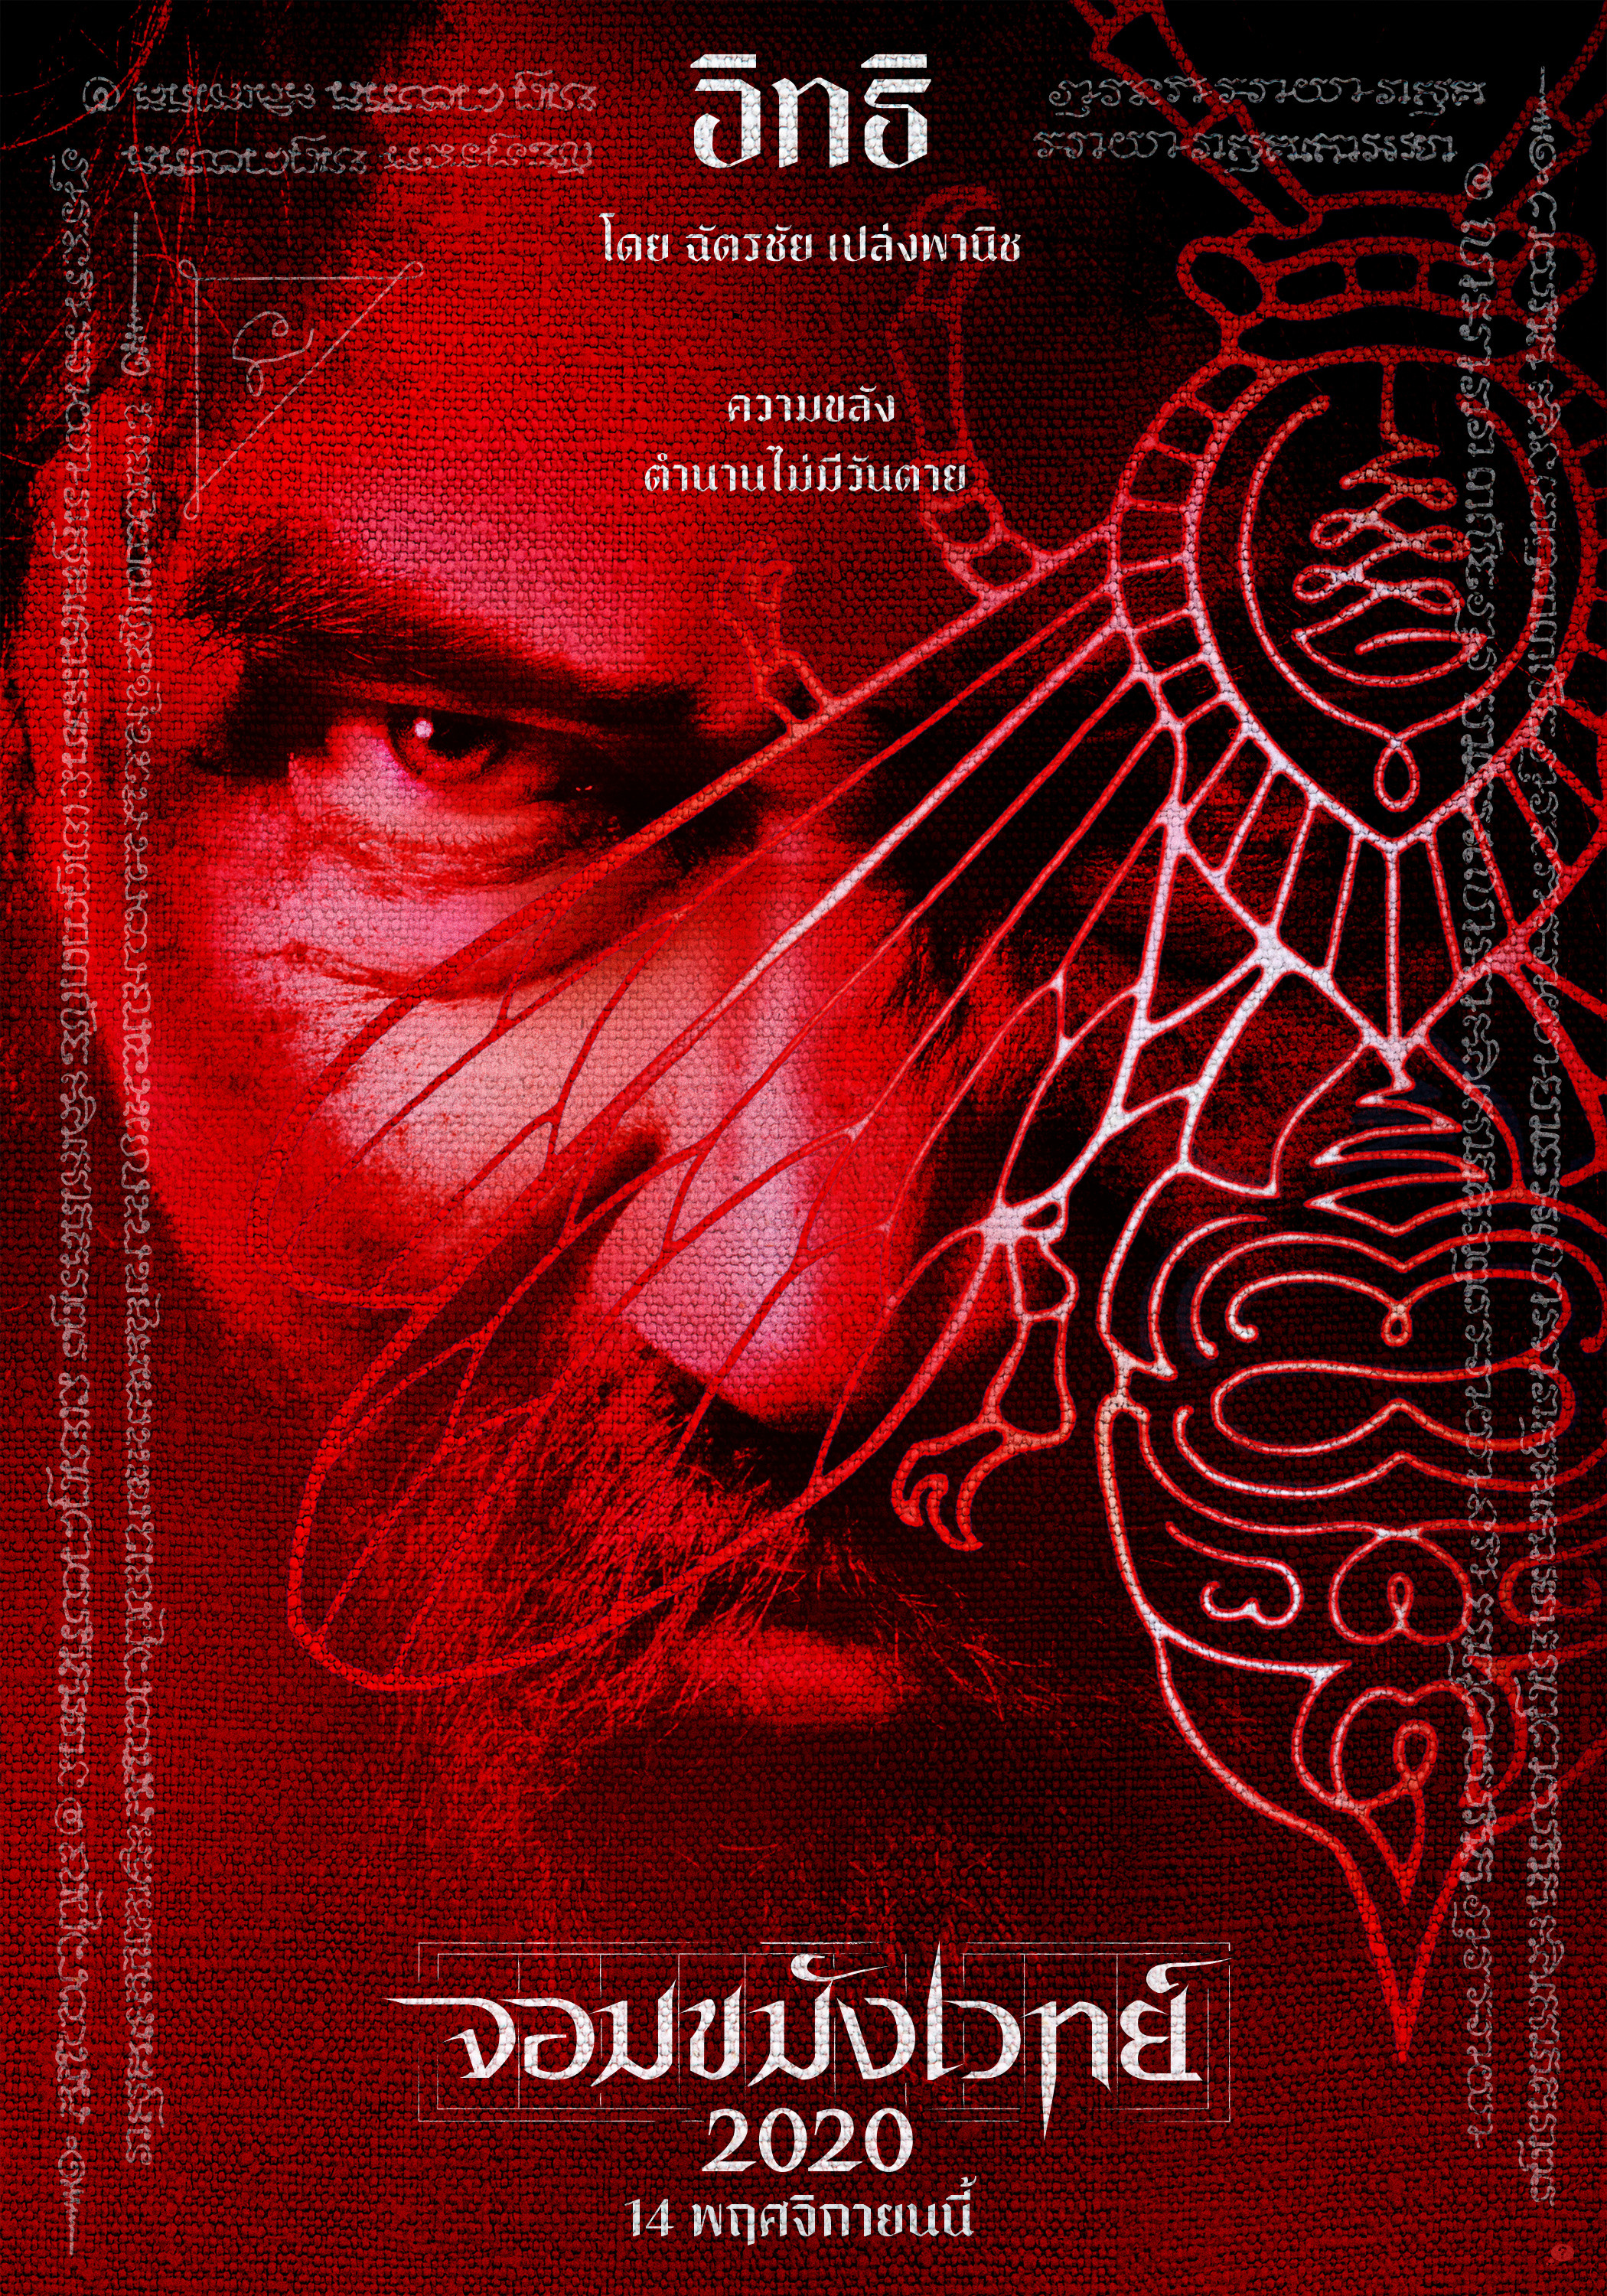 Mega Sized Movie Poster Image for Necromancer 2020 (#1 of 11)